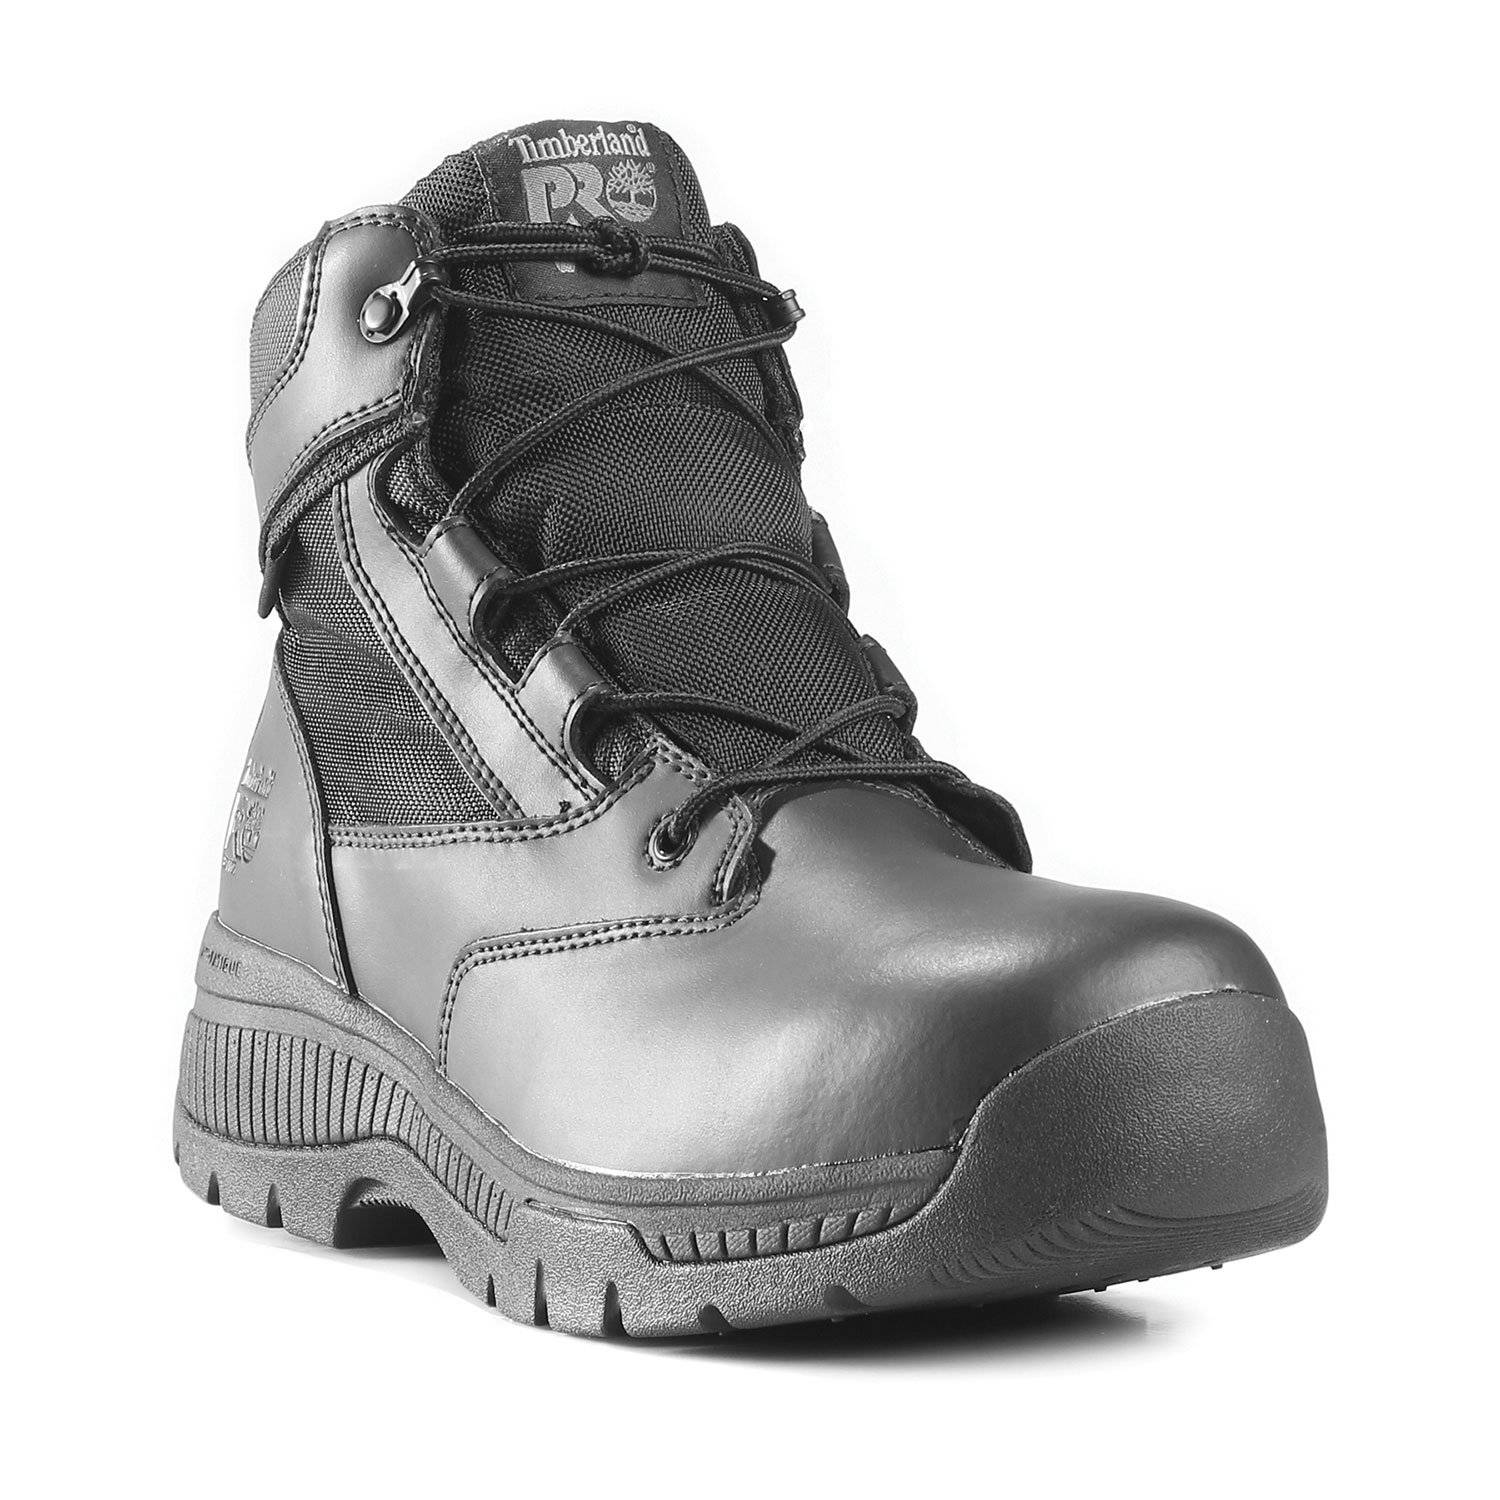 Timberland 6" PRO Valor Duty Waterproof Boots w/ Soft Toe